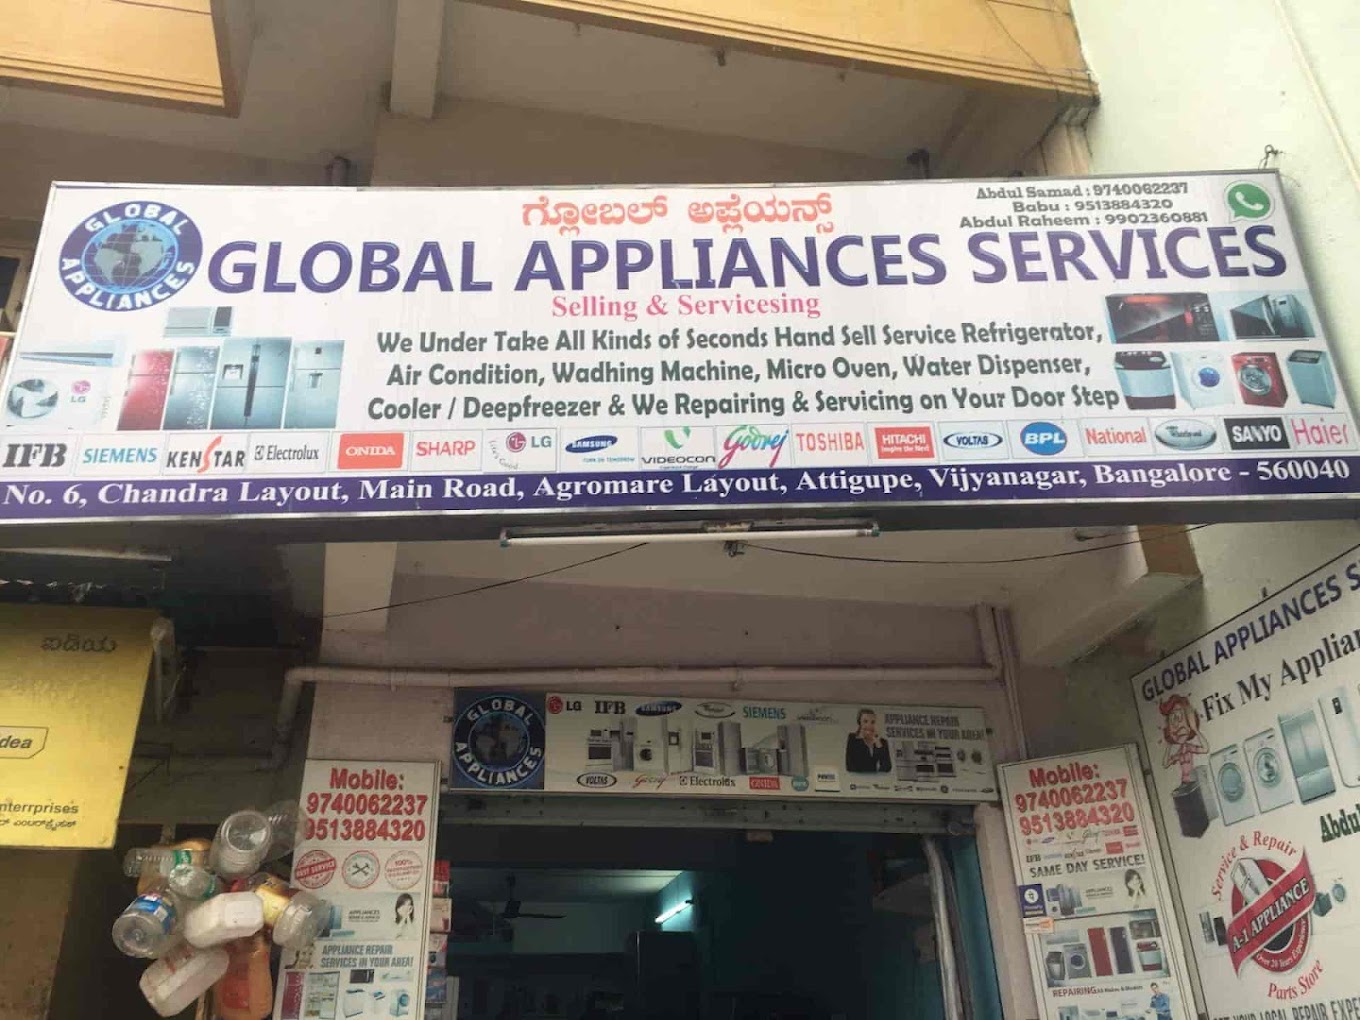 Global appliances services